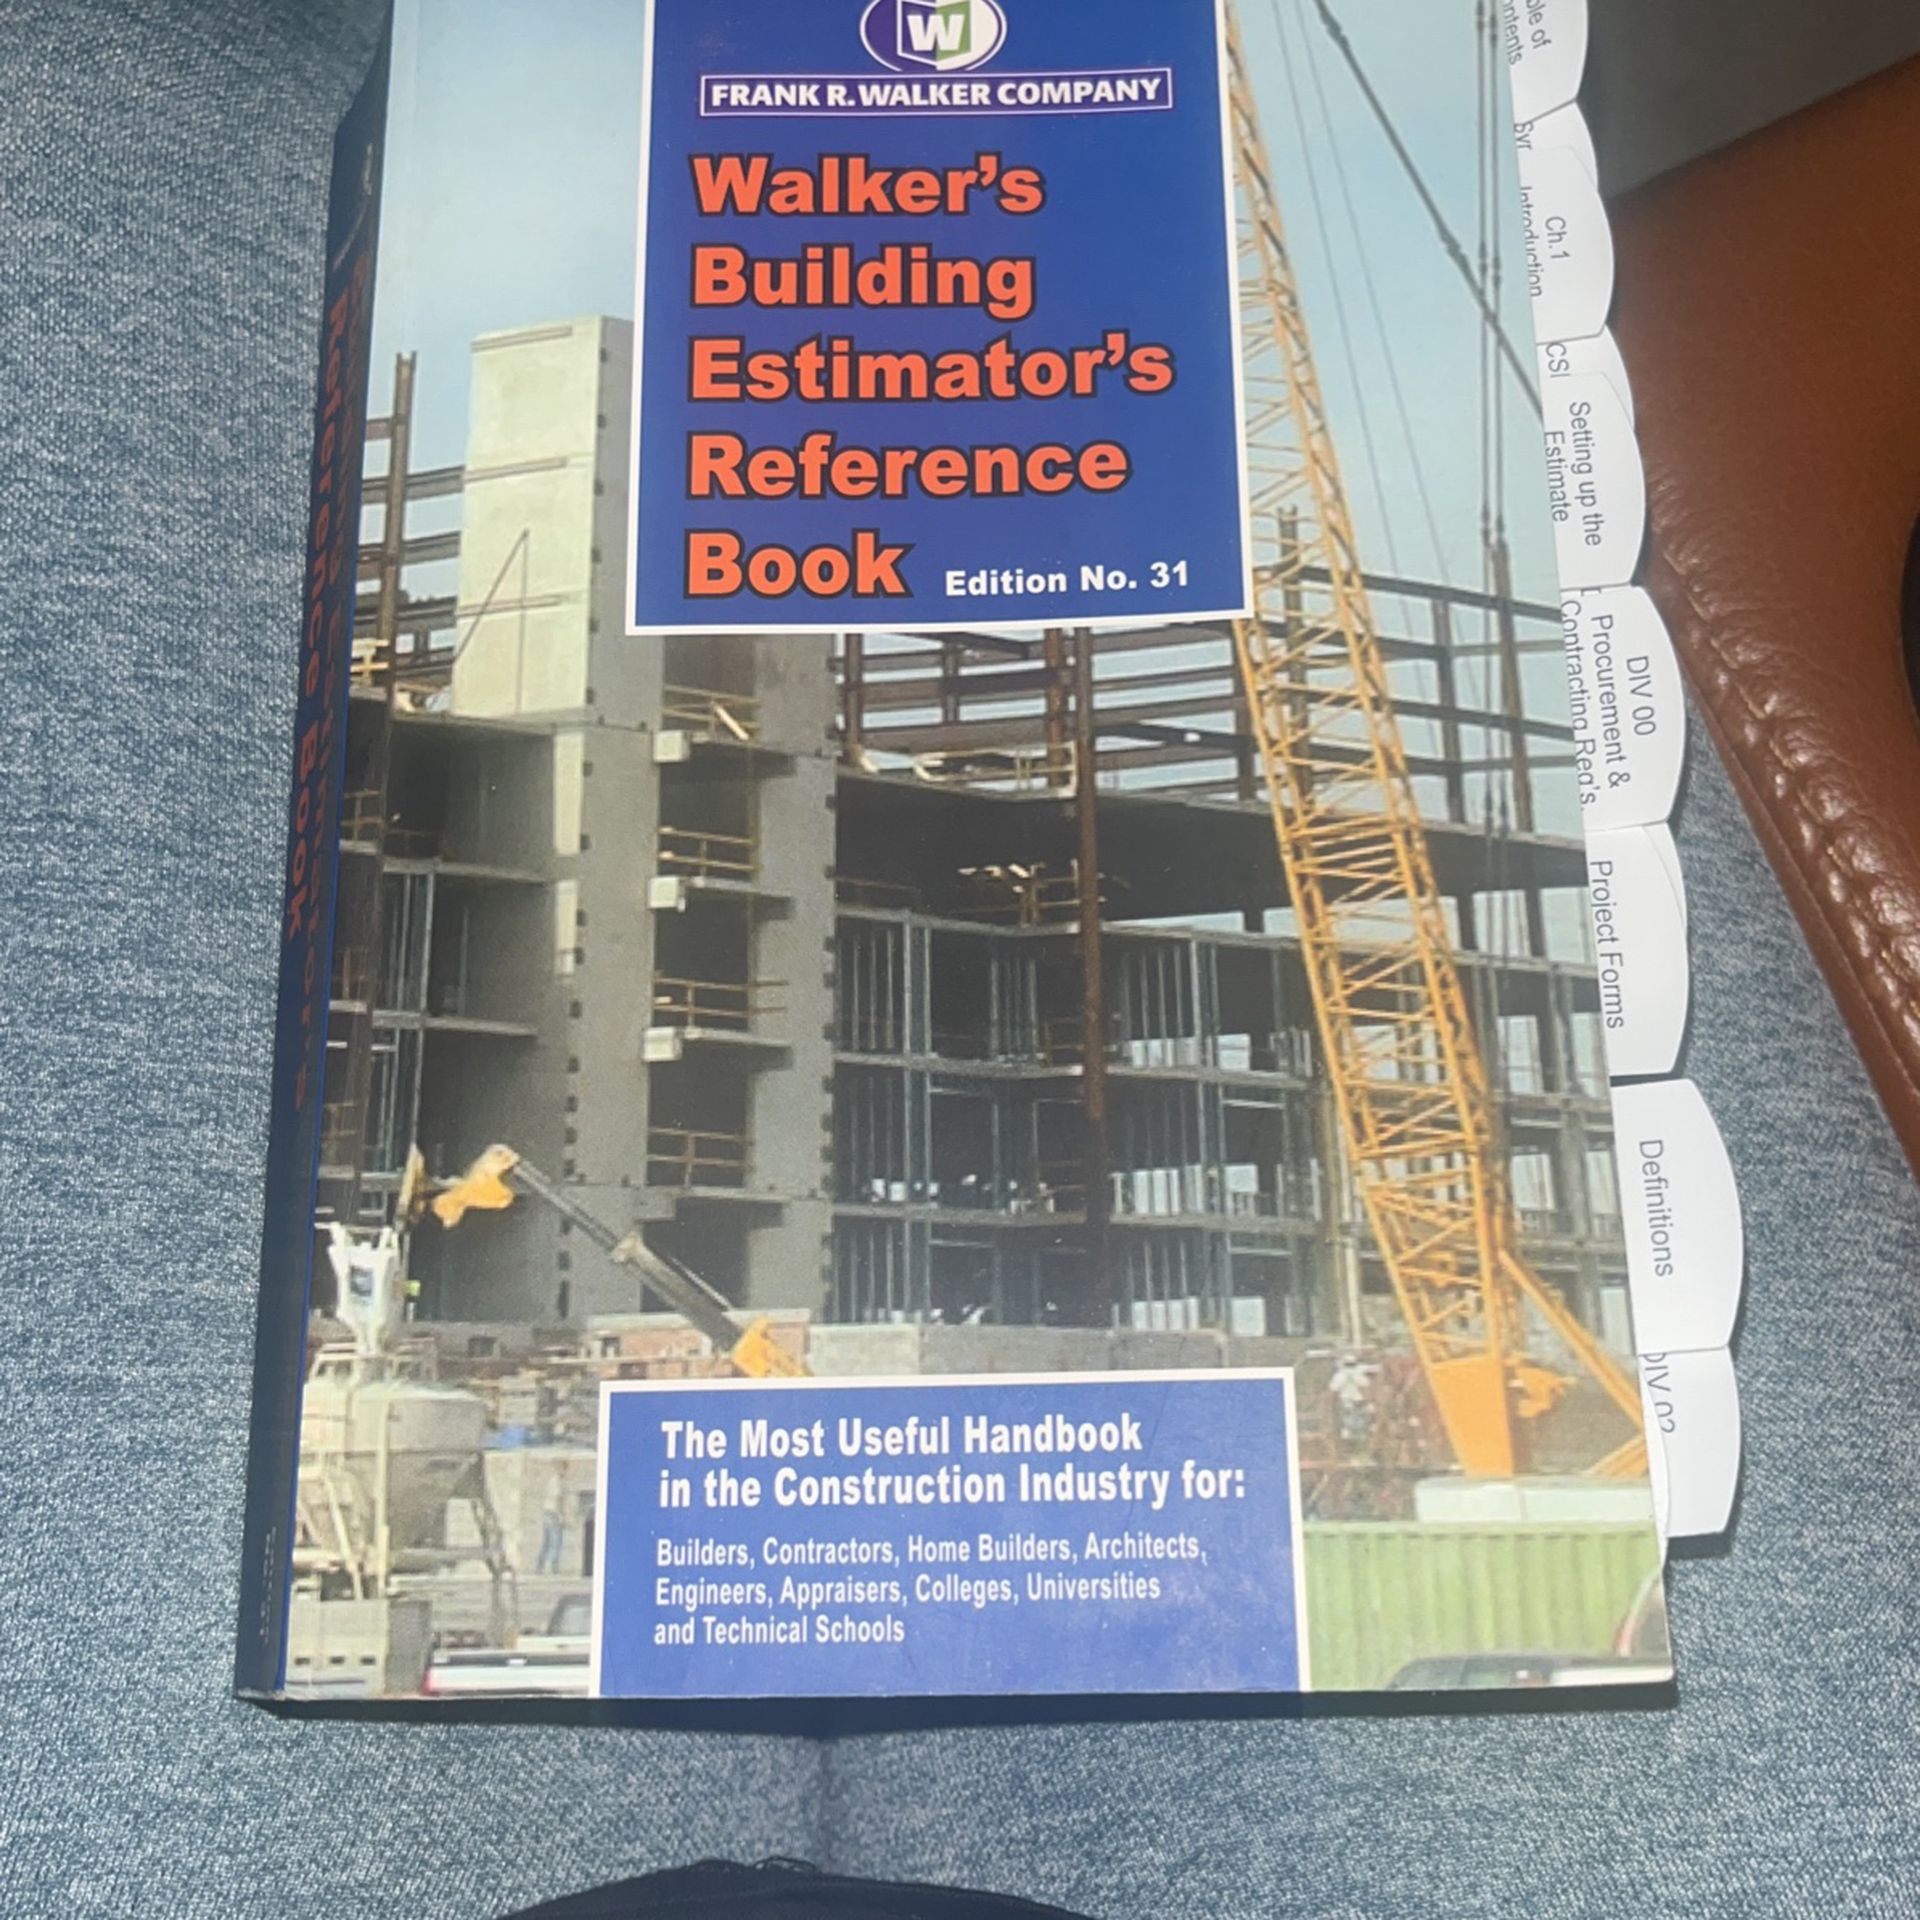 Walkers Building Estimator’s Reference Book Edition No.31